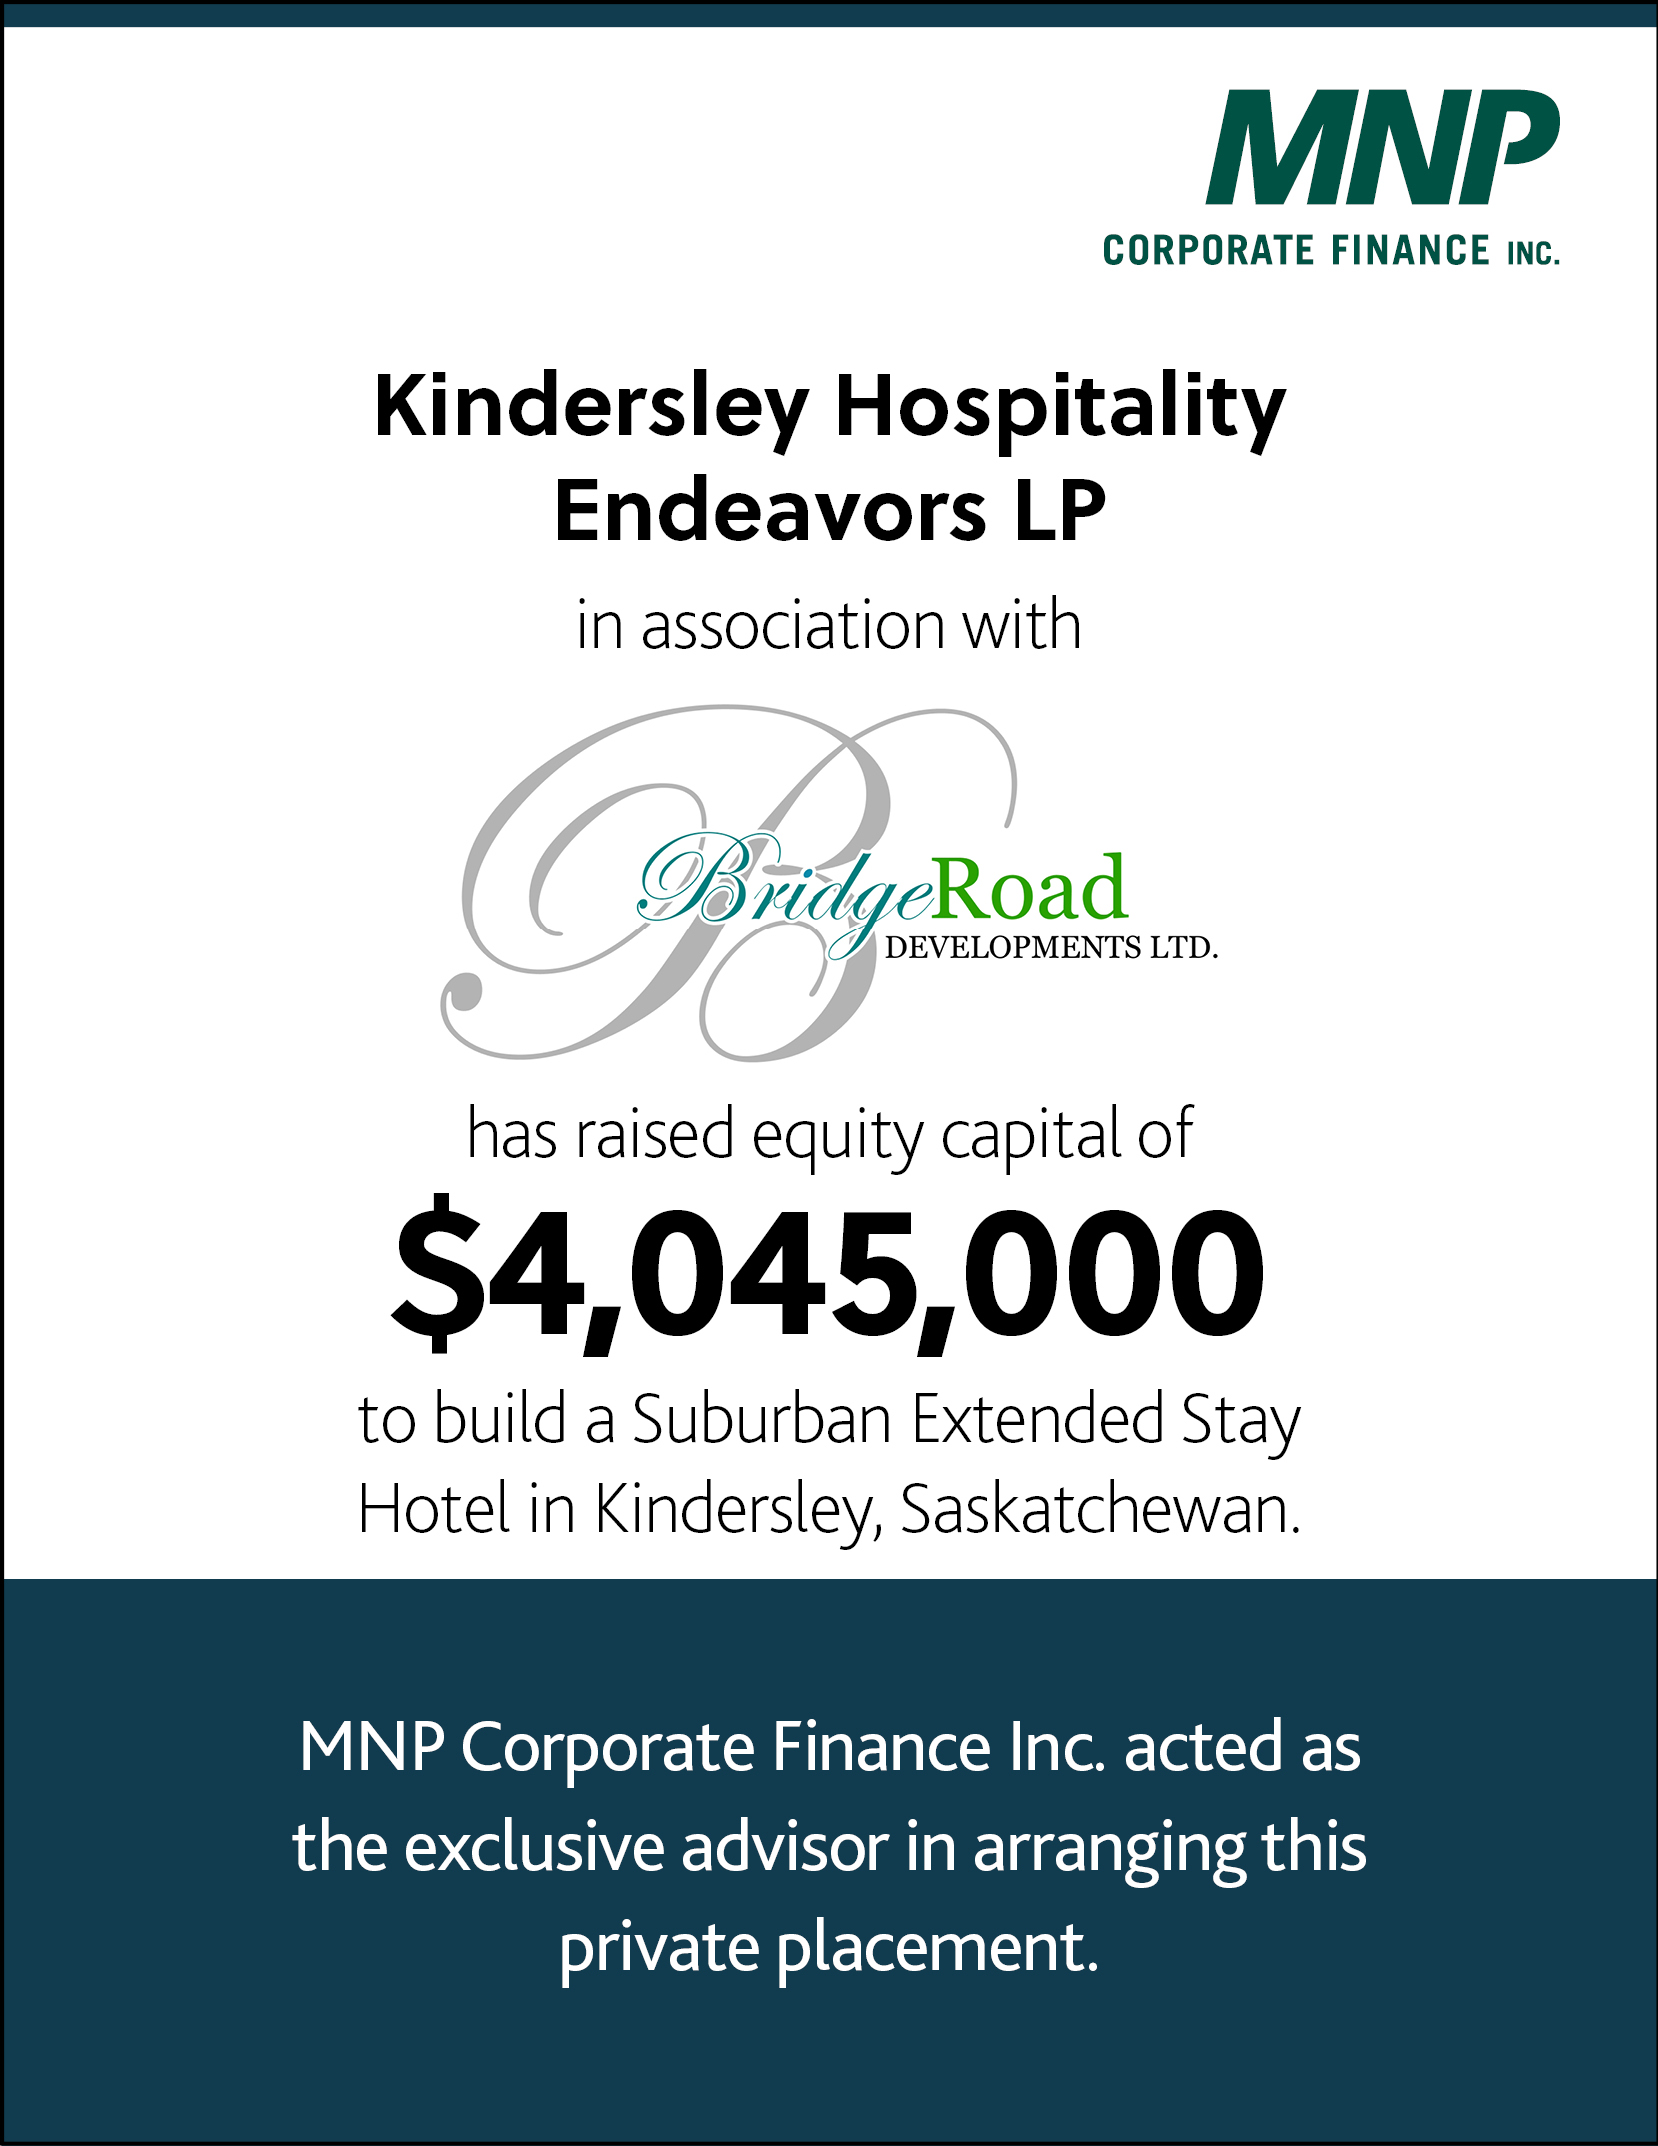 Kindersley Hospitality Endeavors LP in association with BridgeRoad developments Ltd has raised equity capital of $4,045,000 to build a suburban extended stay hotel in Kindersley, Saskatchewan